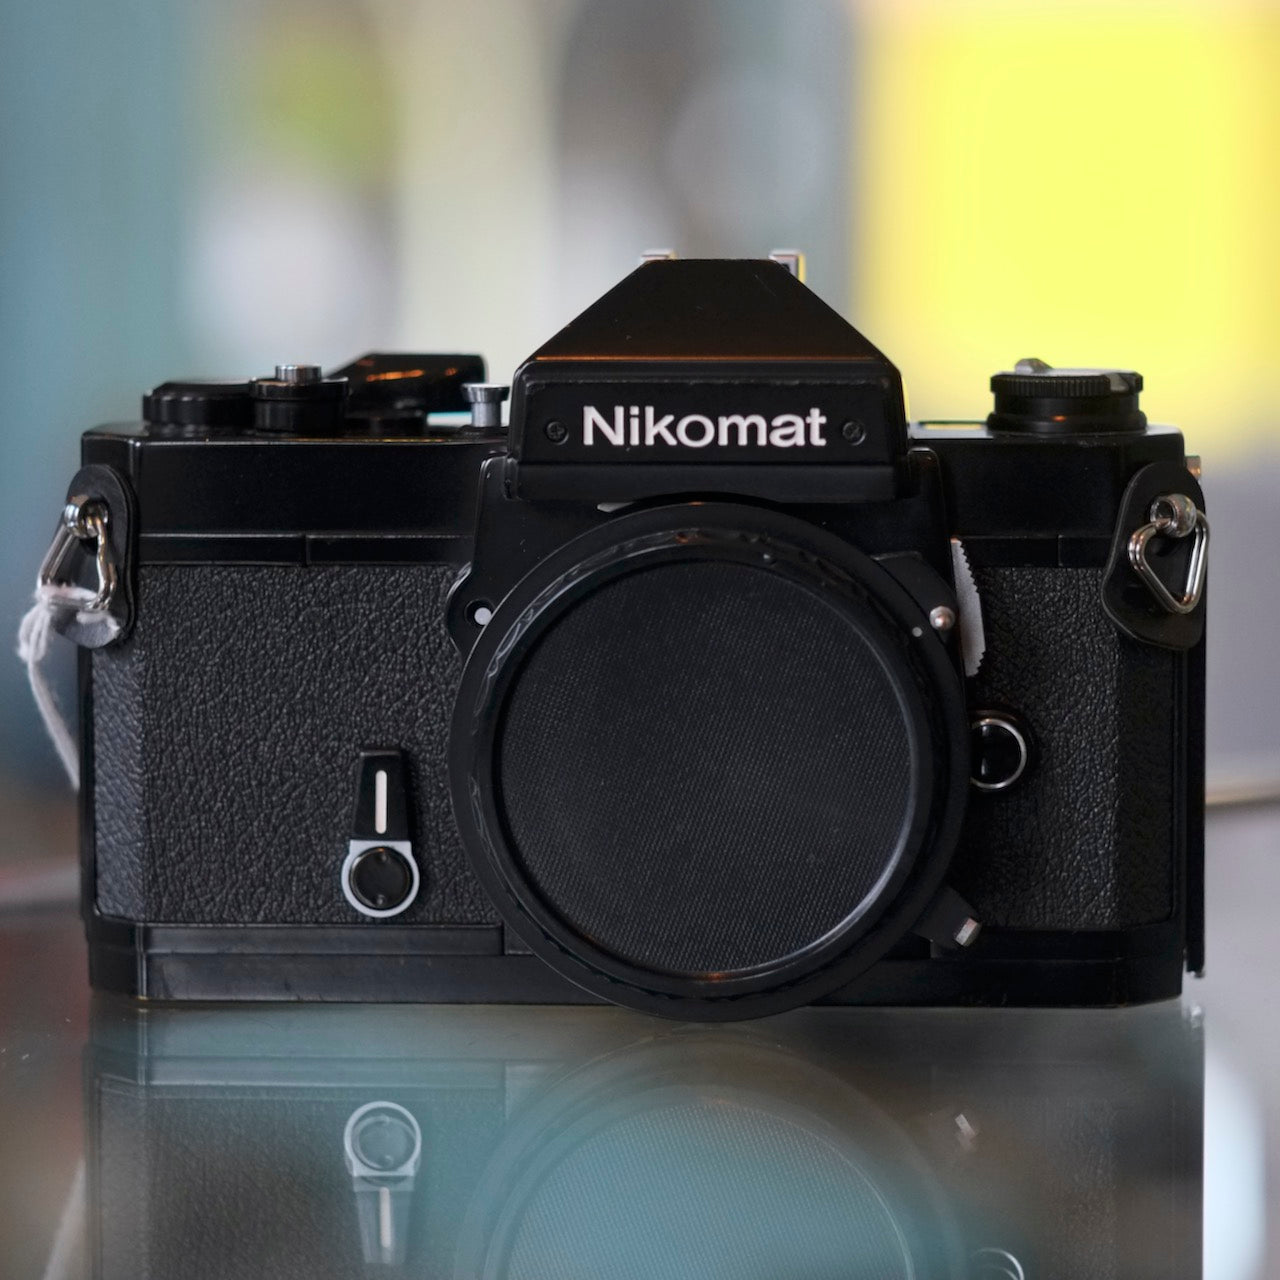 Nikon Nikomat FT2